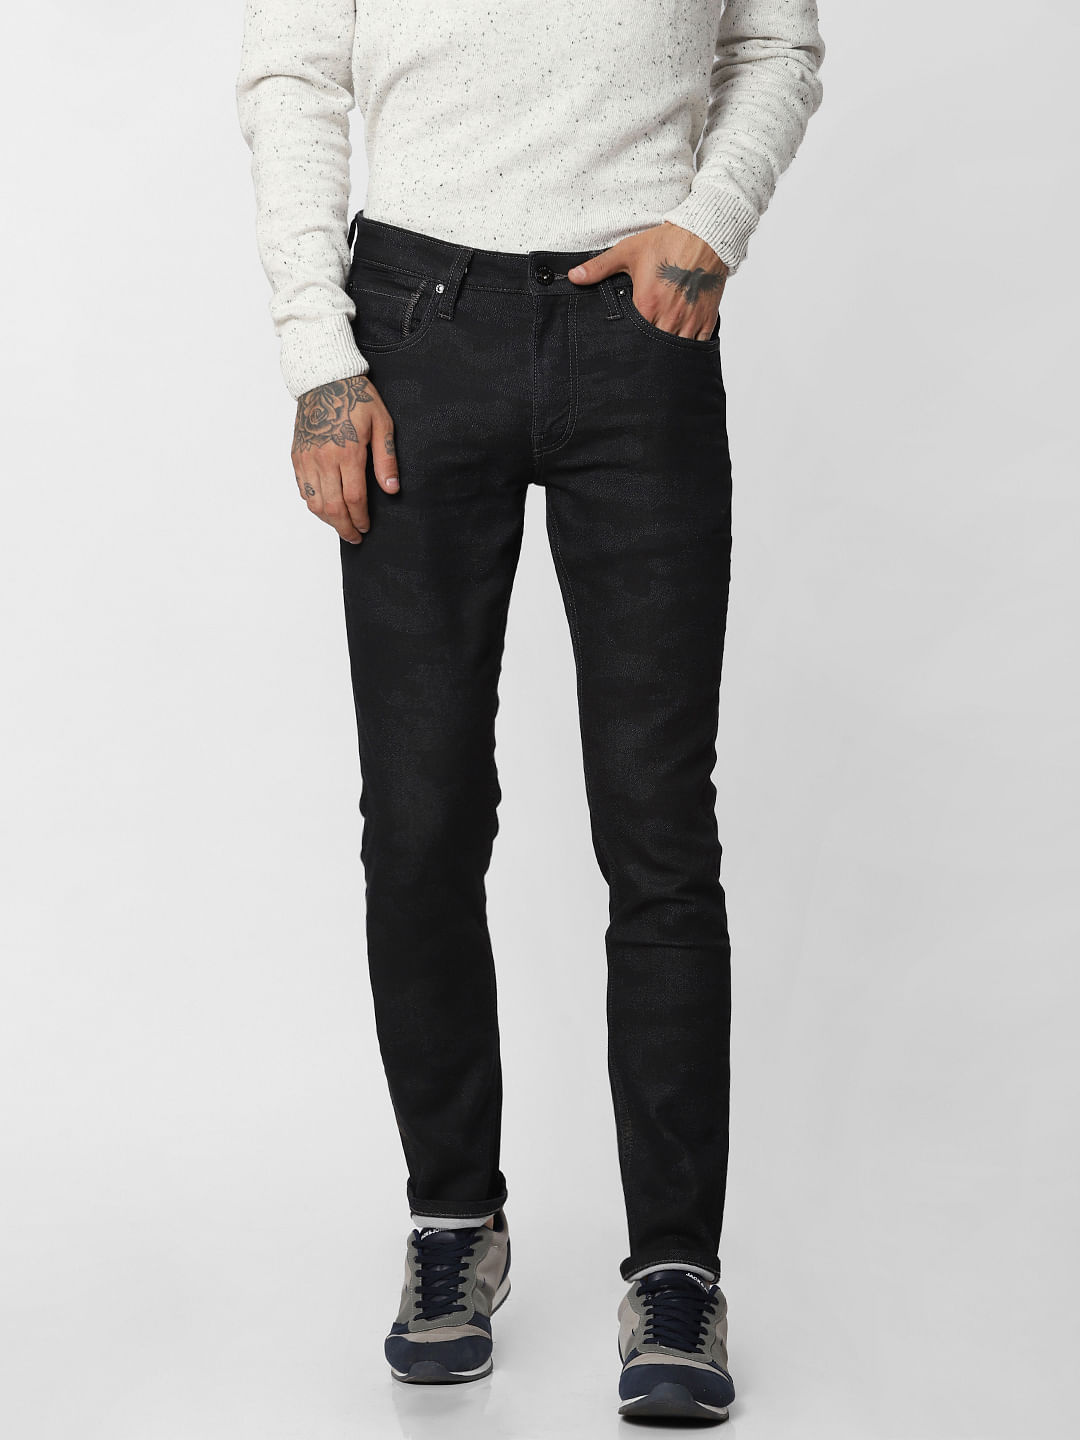 dark grey skinny jeans mens